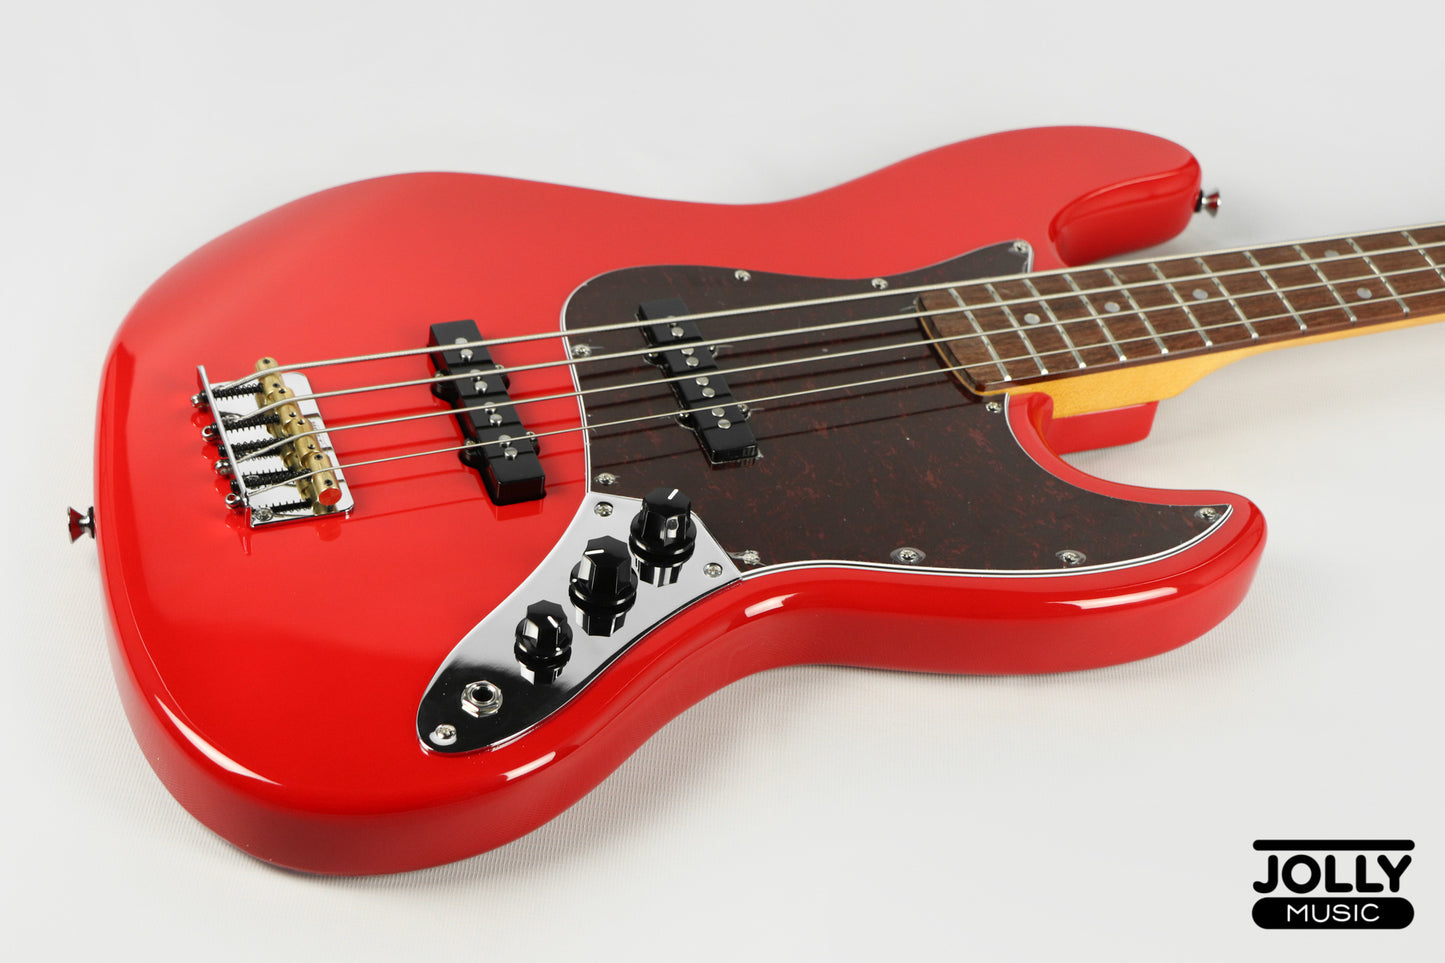 JCraft JB-3V J-Offset 4-String Bass Guitar - Fiesta Red